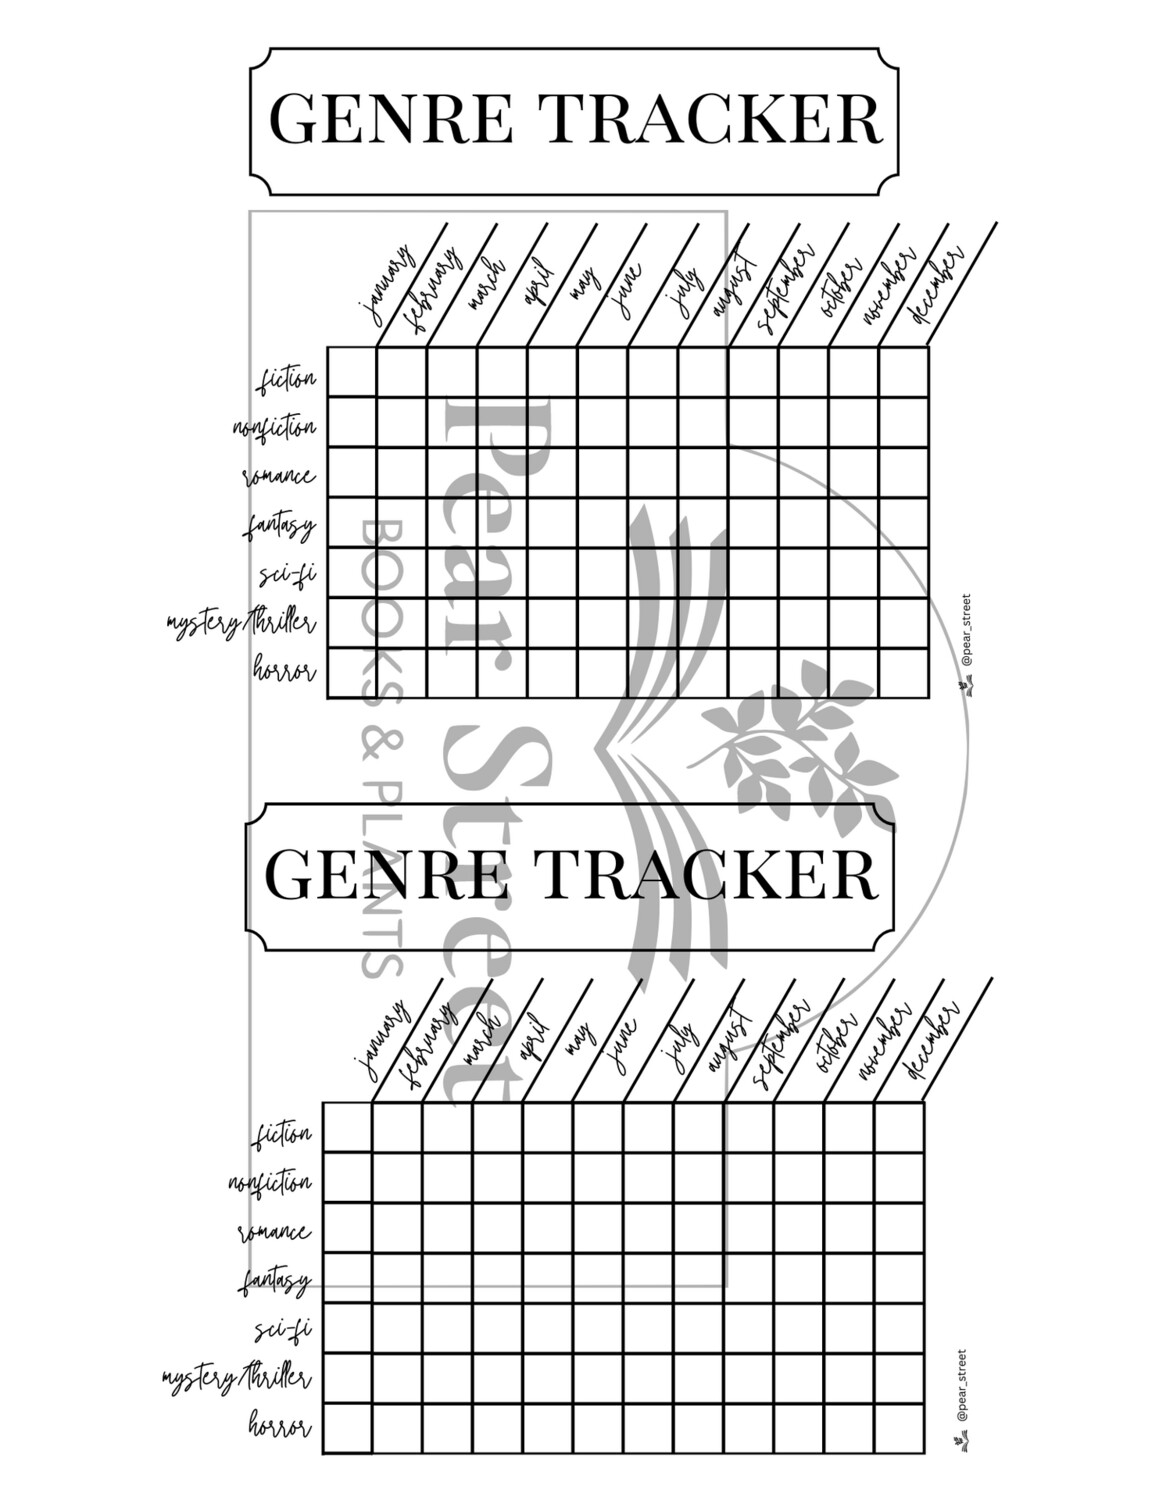 Monthly Genre Tracker Printable for Book Journal, minimalist design